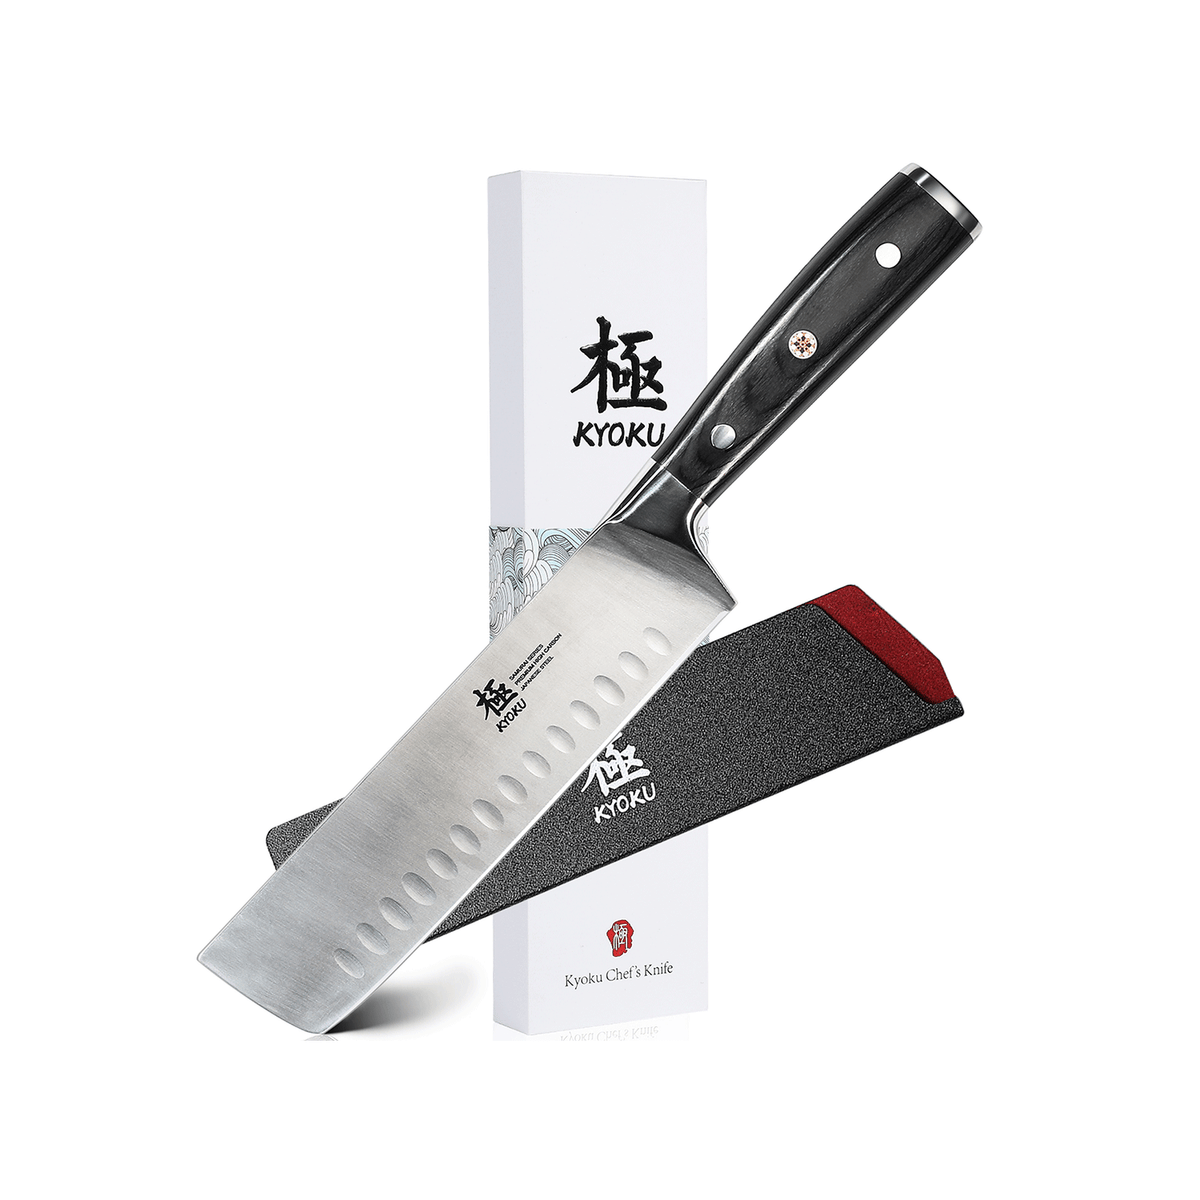 KEEMAKE Nakiri Knife Japanese Vegetable Knife 7 inch